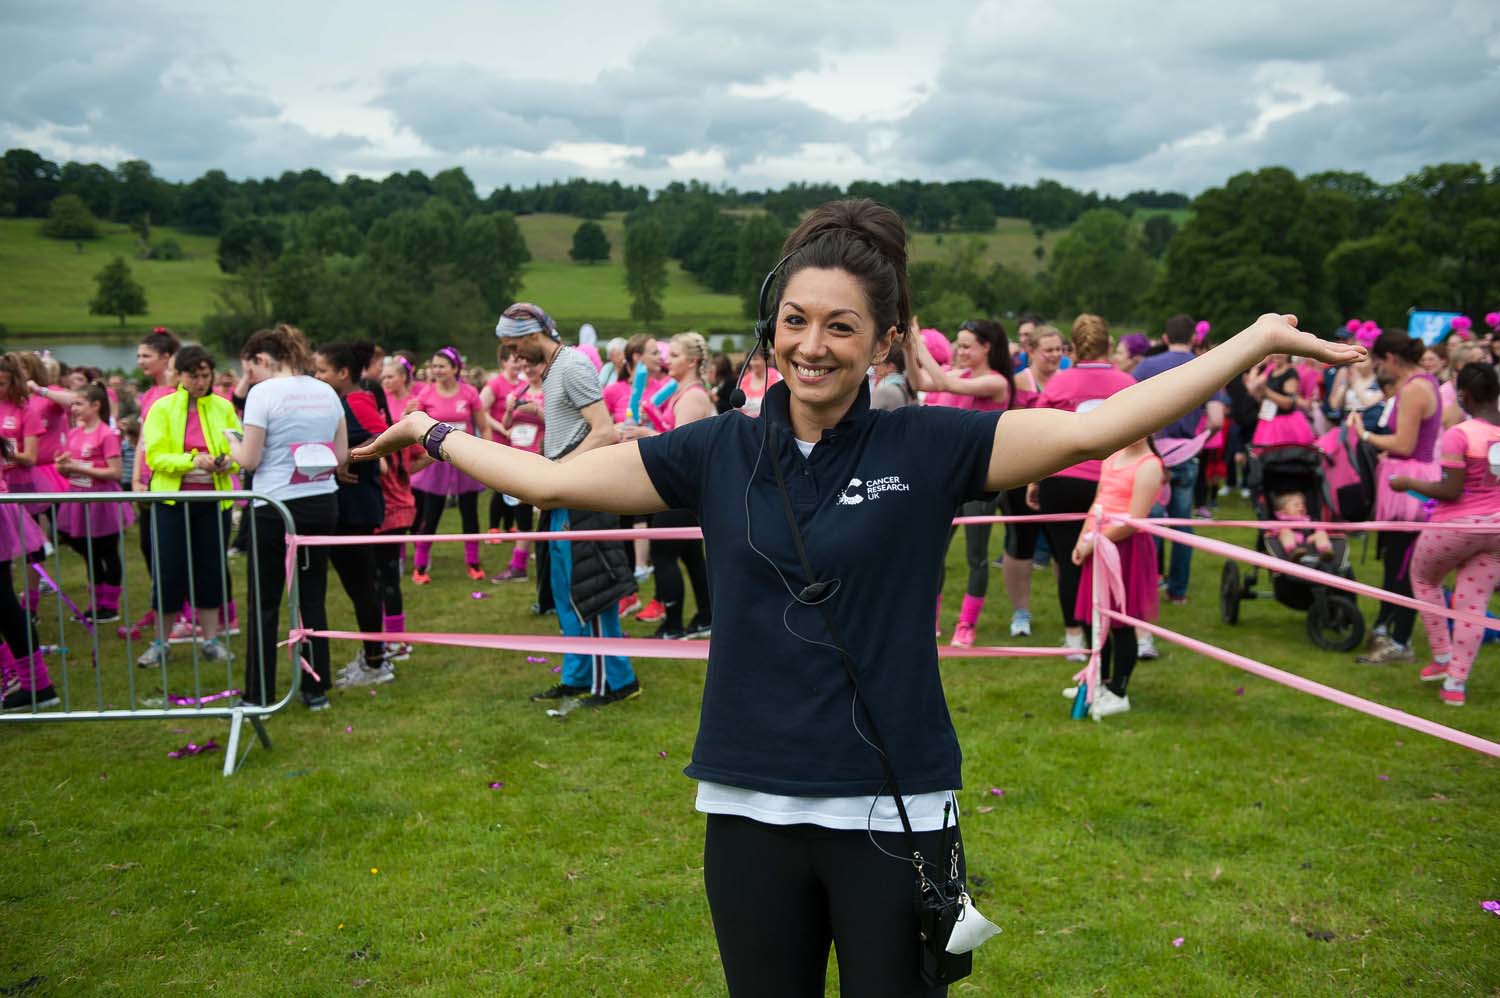 Georgina Thornton, Race for Life event manager for Harrogate